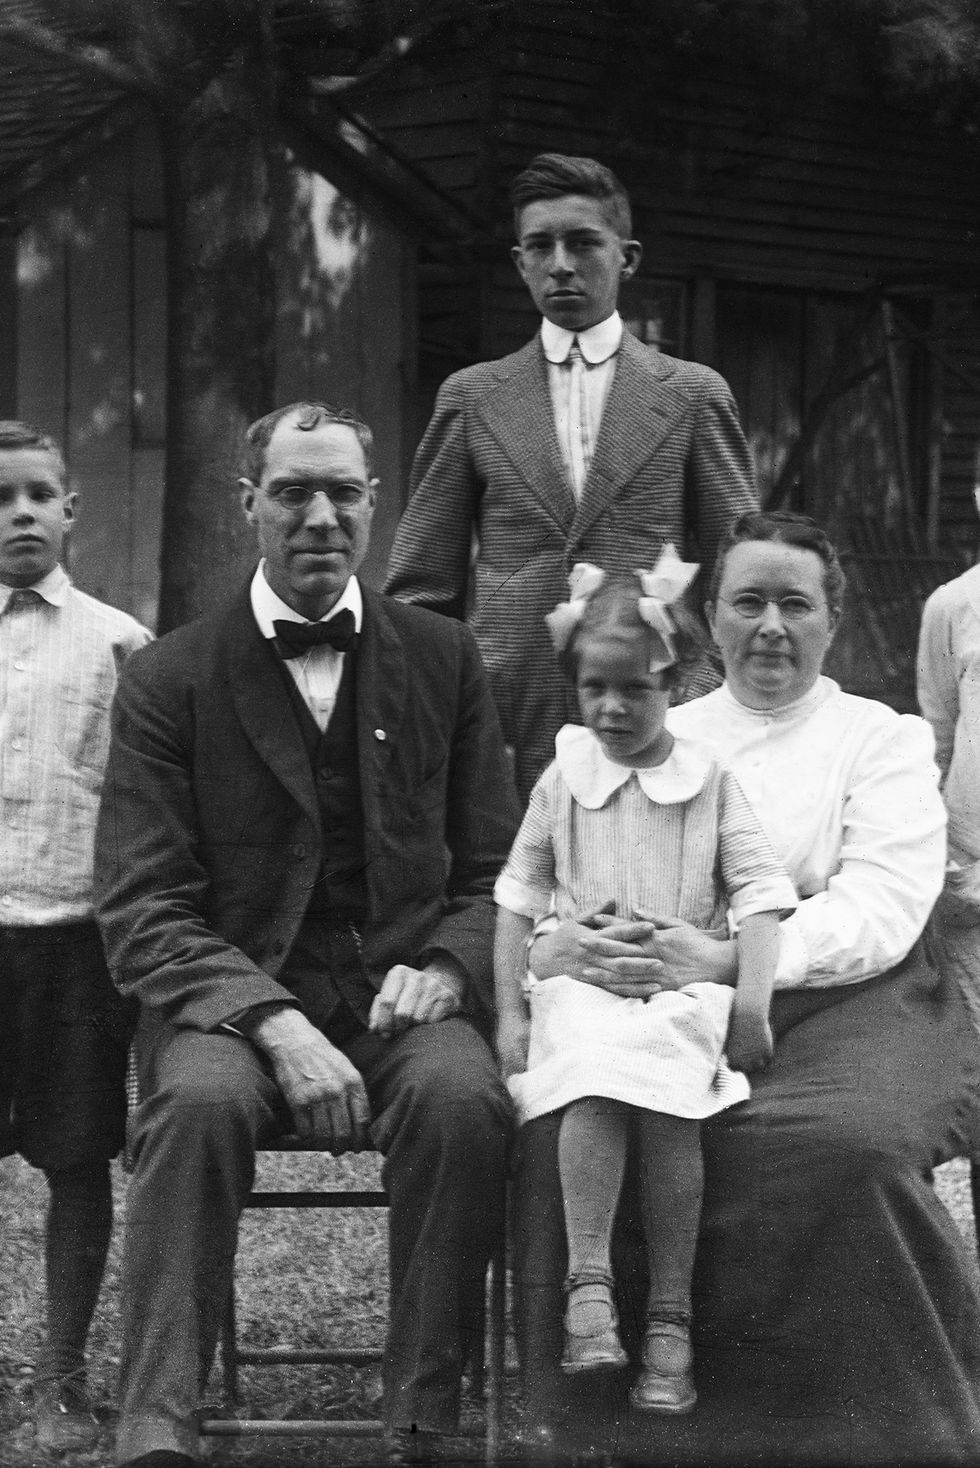 1918 family